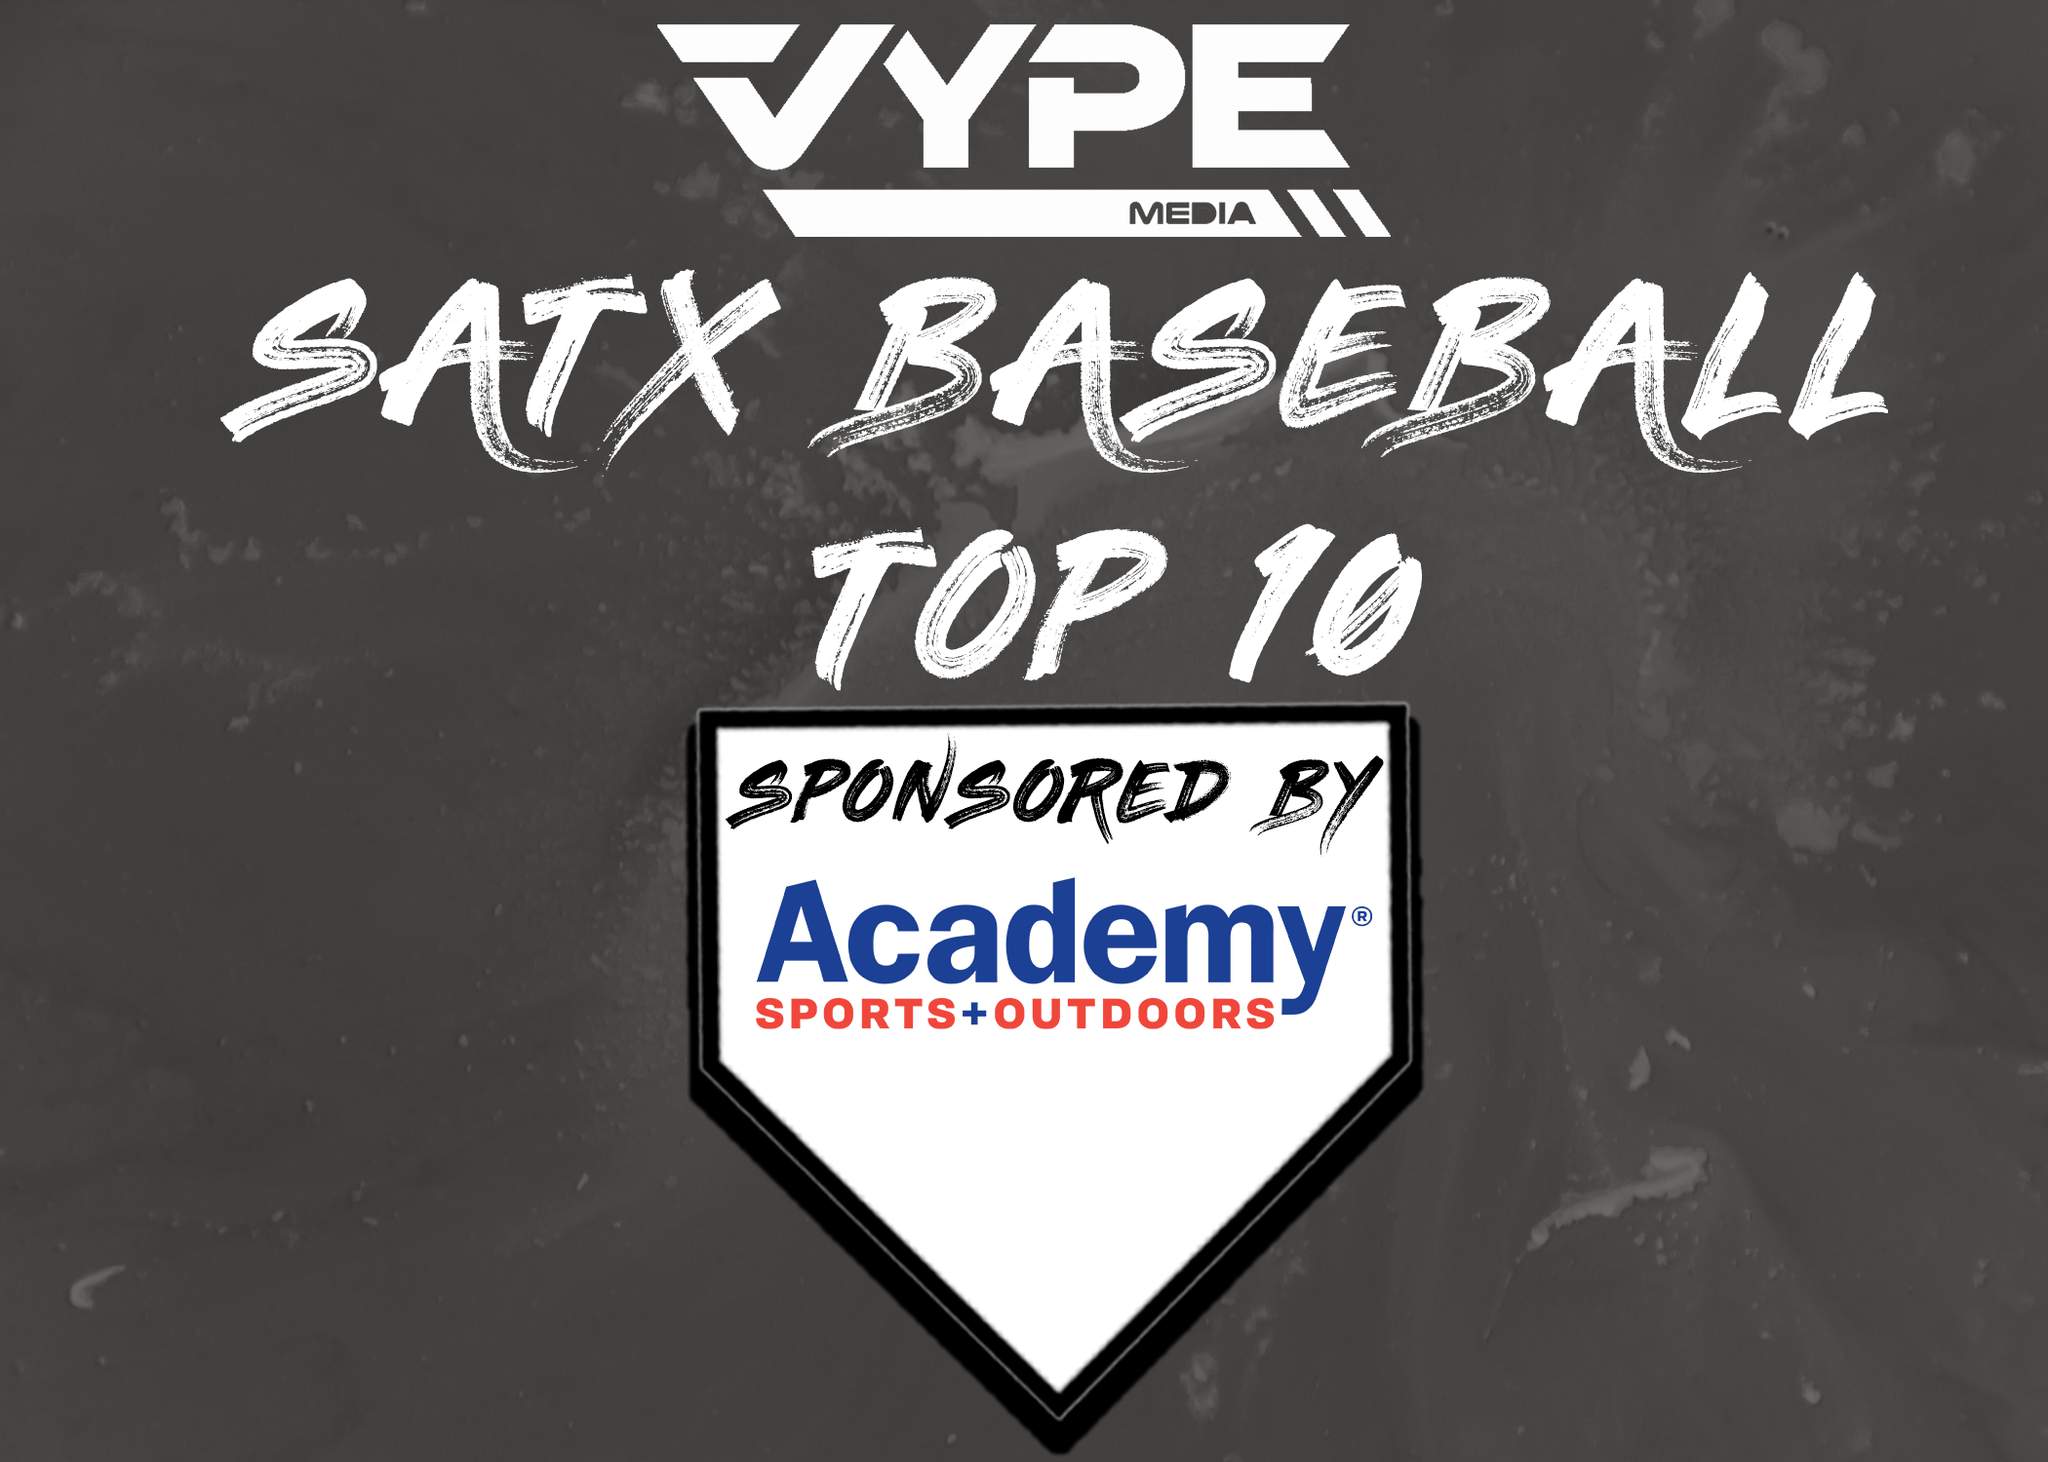 VYPE San Antonio Baseball Top 10 Rankings: Week of 03/22/2021 presented by Academy Sports + Outdoors